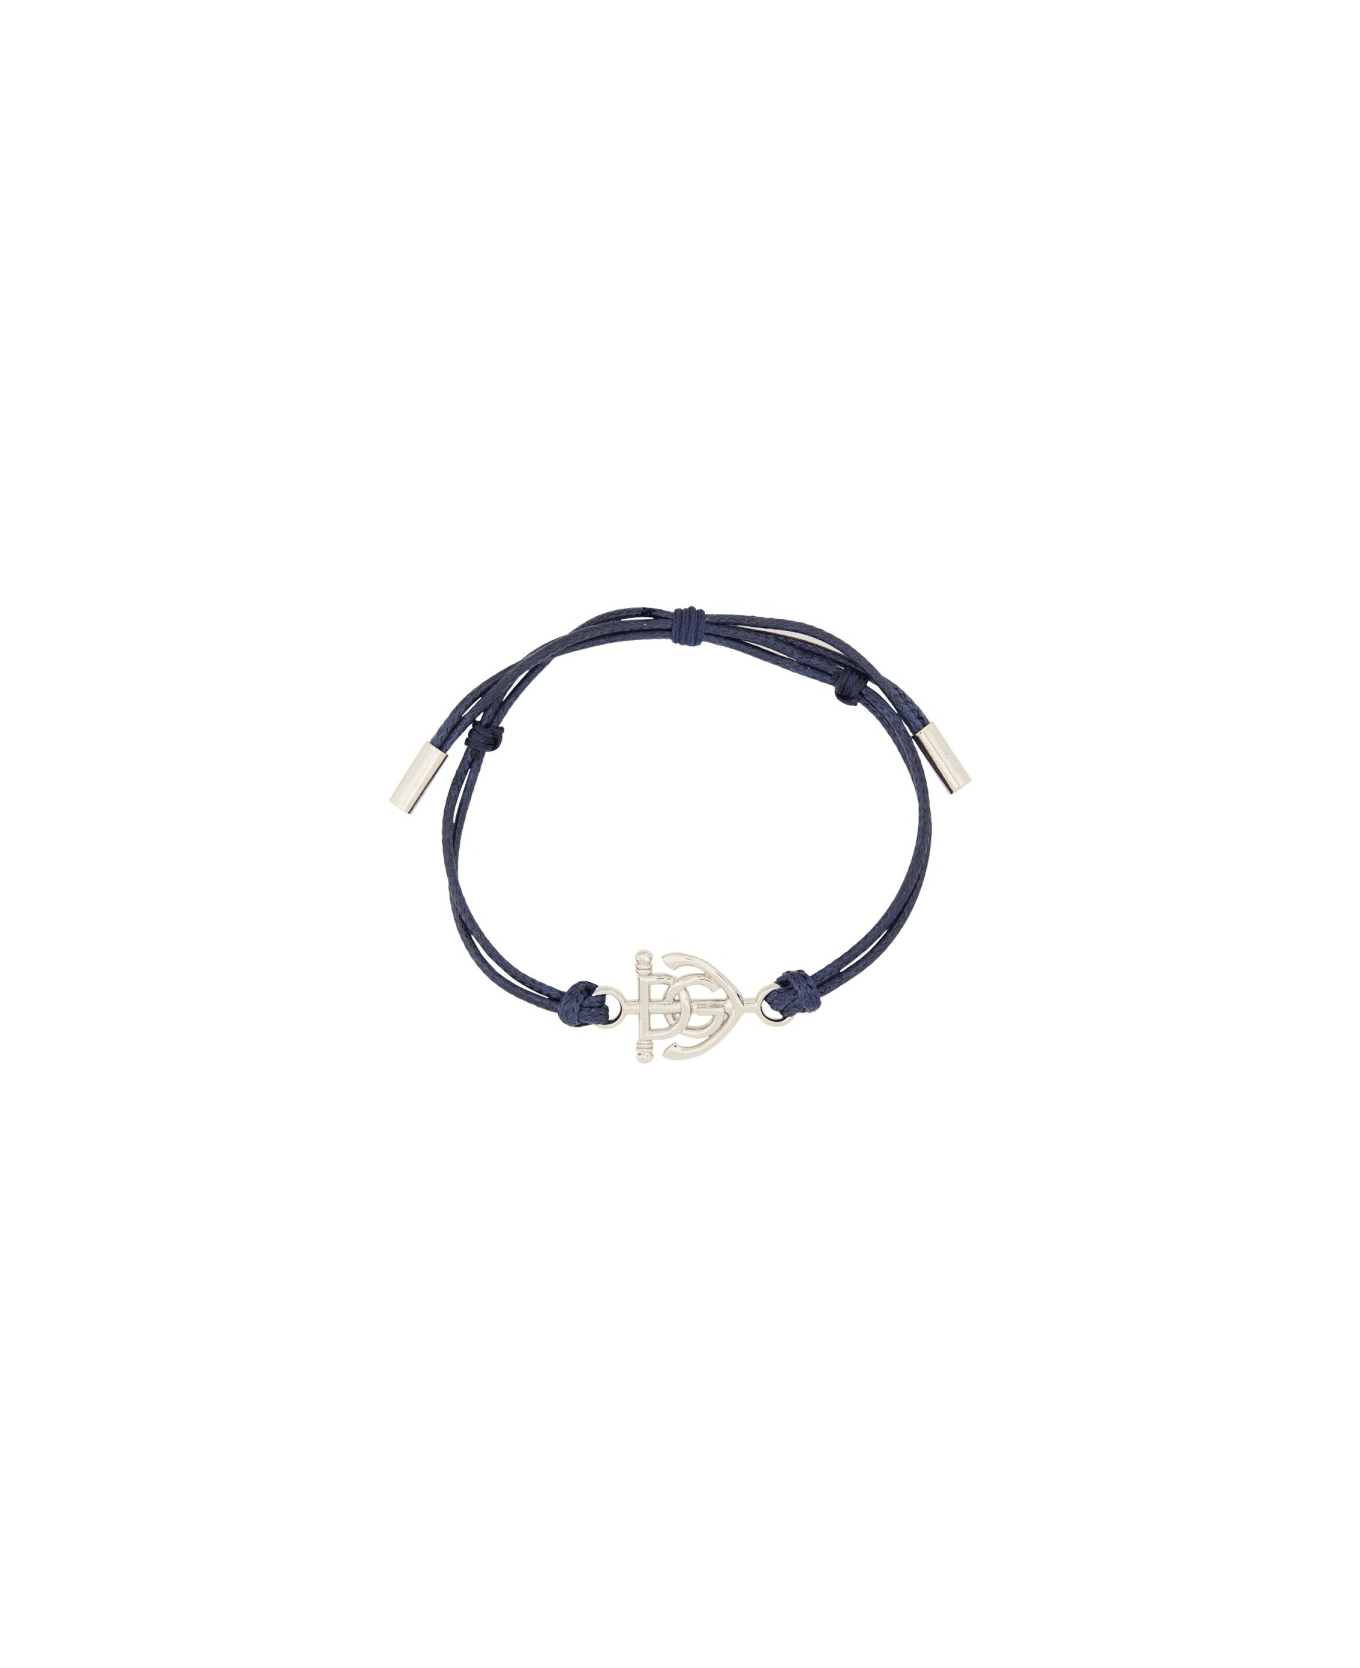 Dolce & Gabbana "navy" Lanyard Bracelet - BLUE ブレスレット